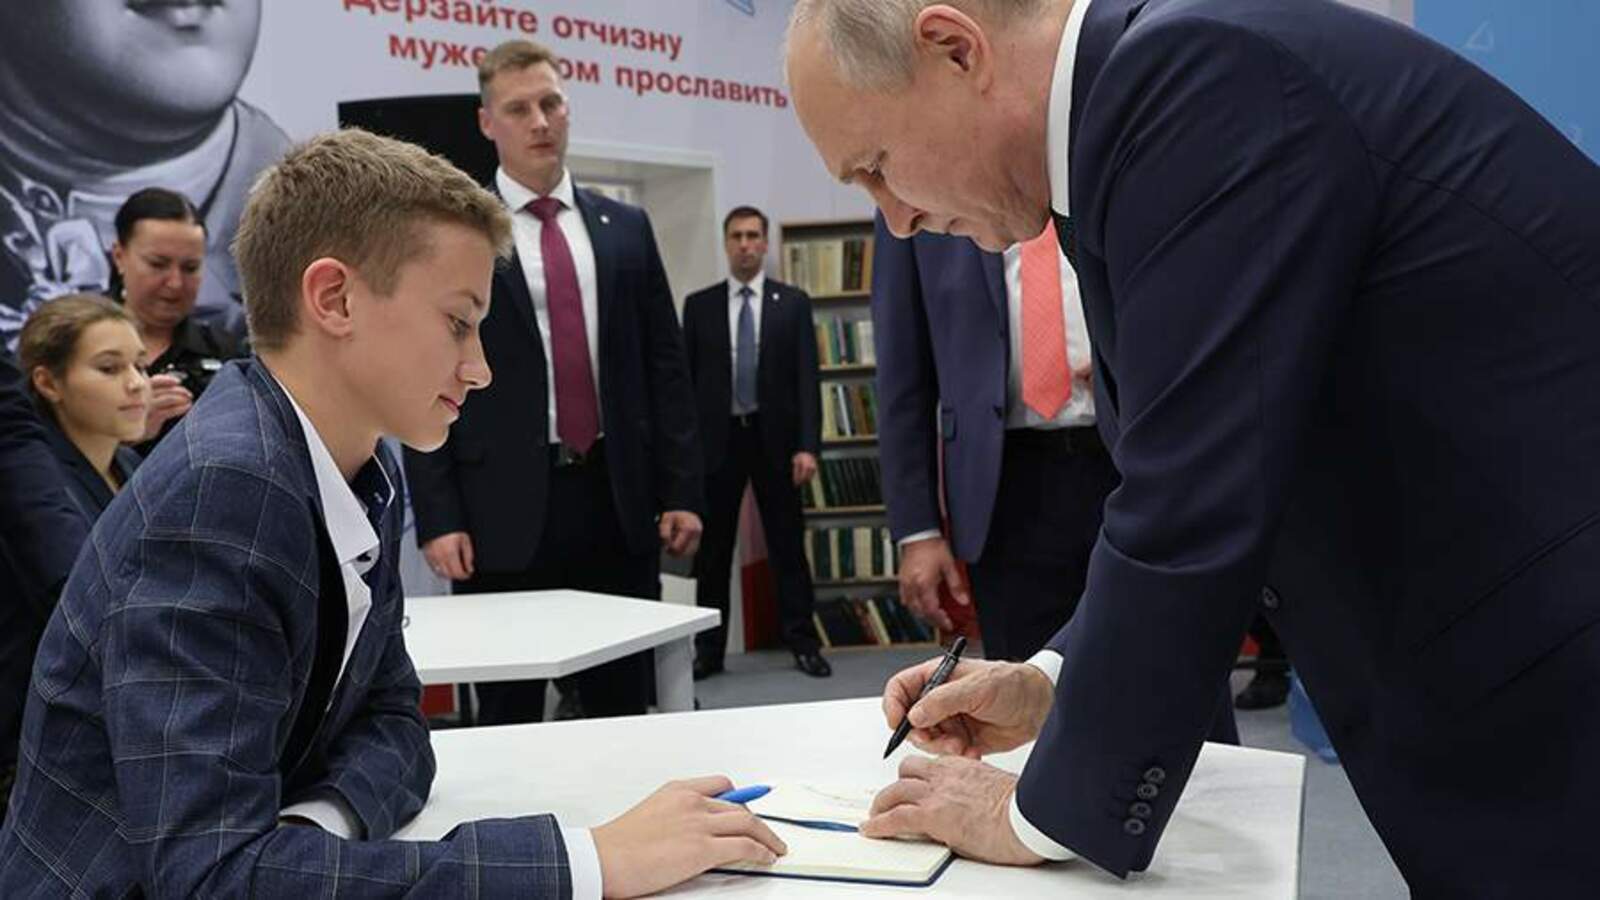 Путин шкул ачине унӑн сӑввисене пичетлесе кӑларма пулӑшма шантарнă